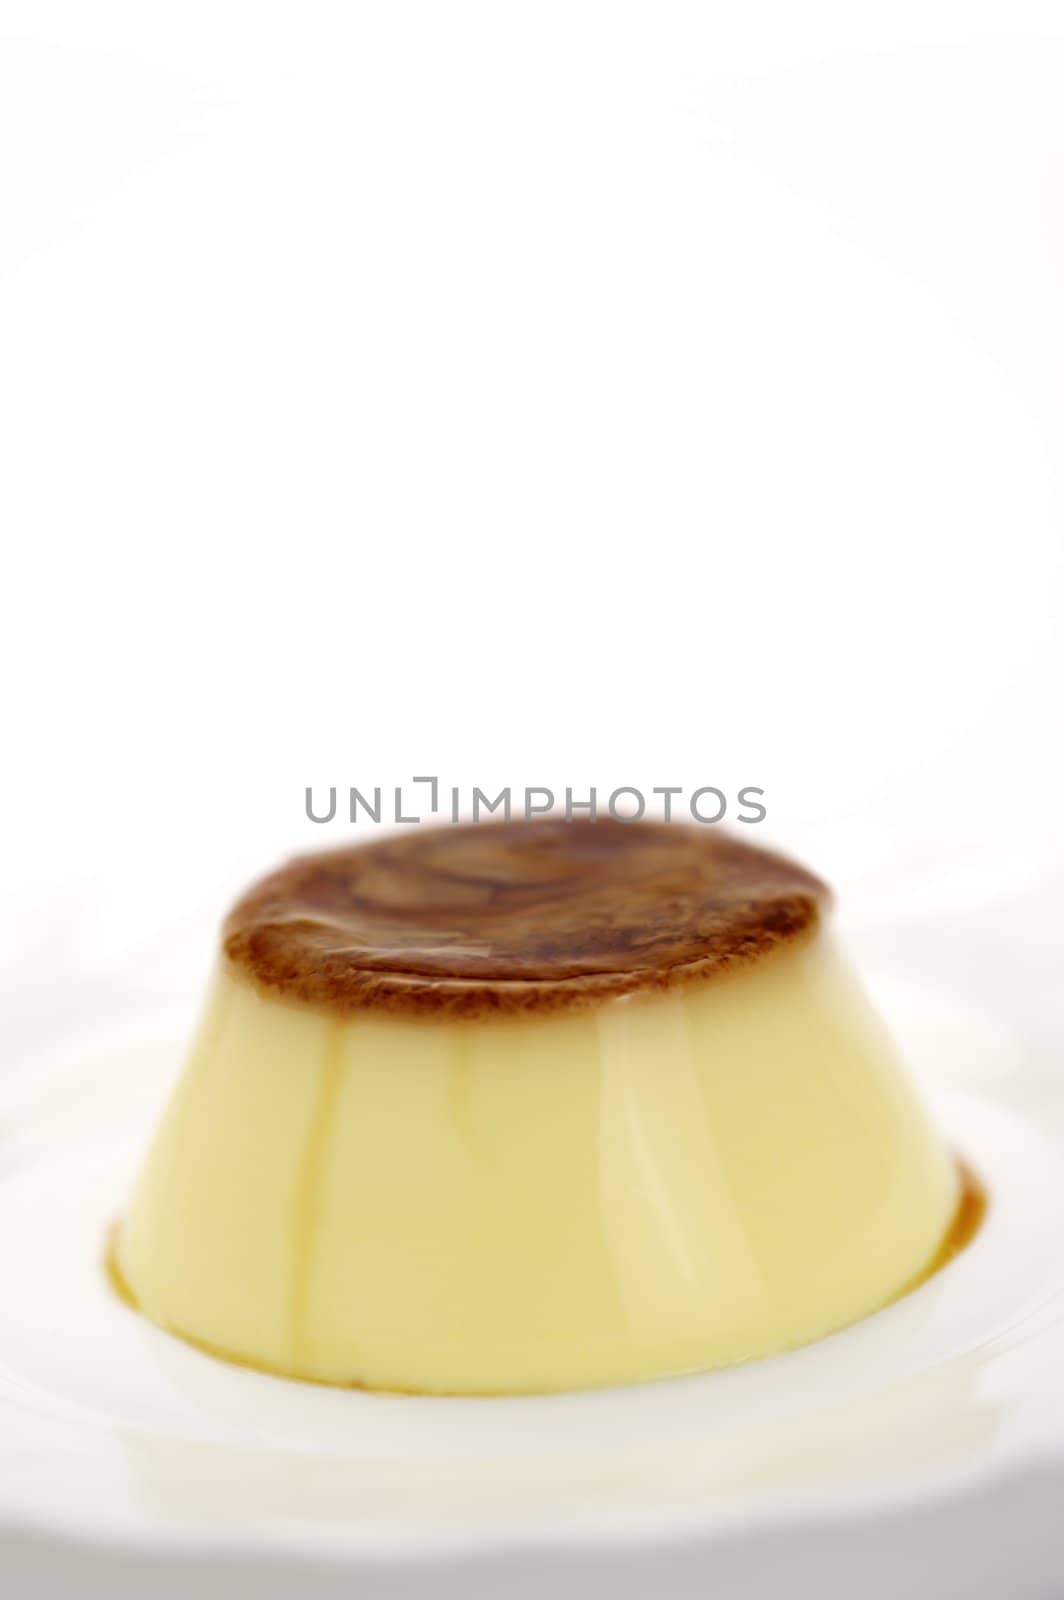 Dessert on a plate by Baltus